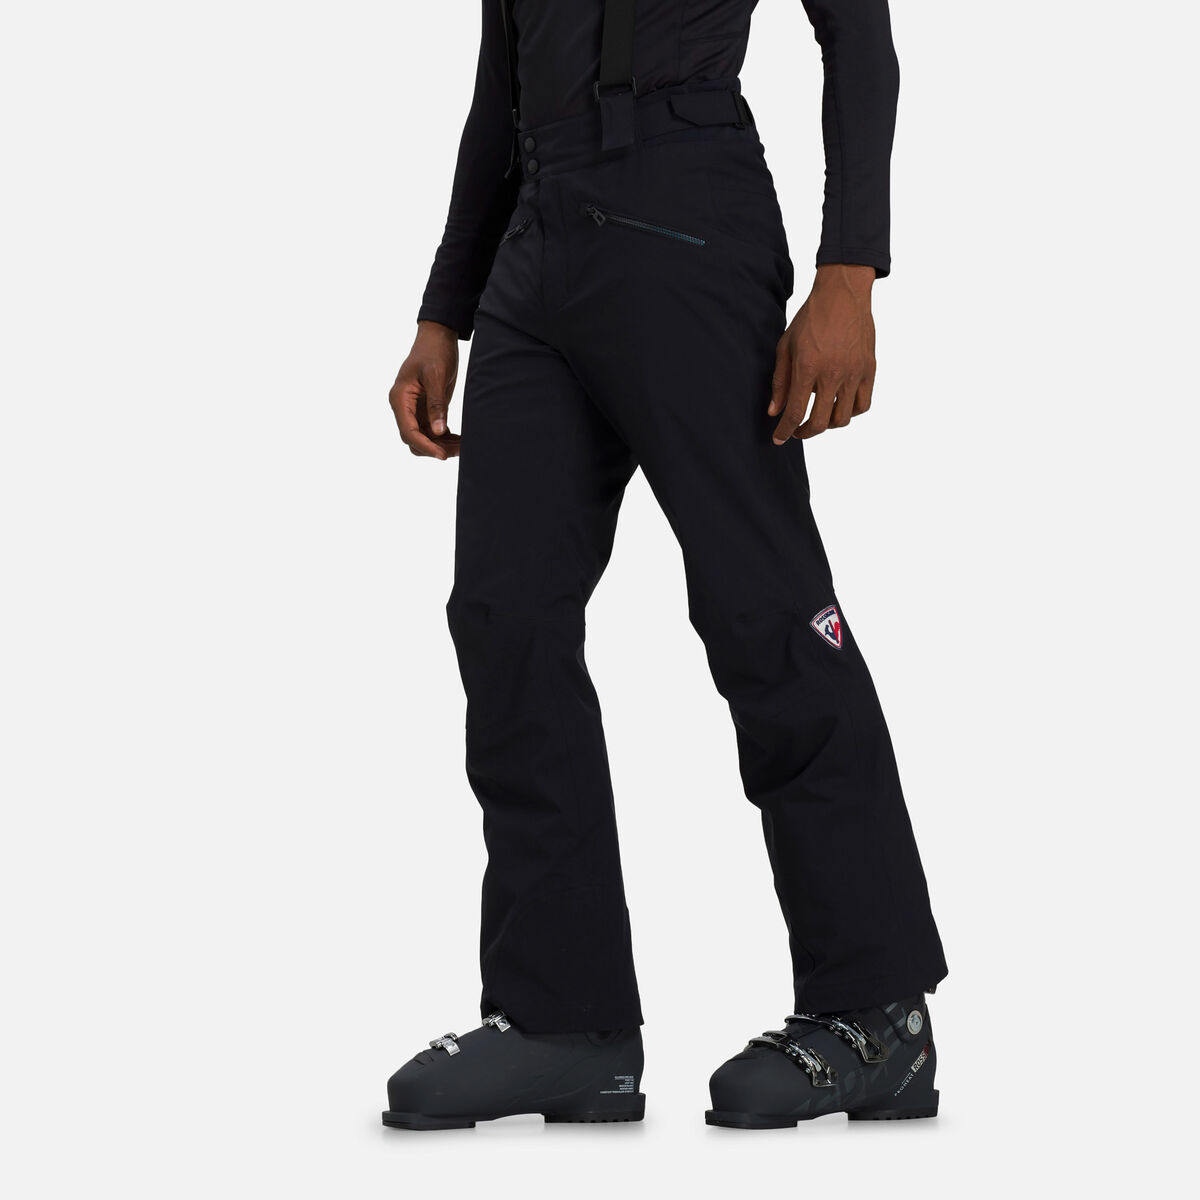 Rossignol Pantalon de ski Classique Homme black